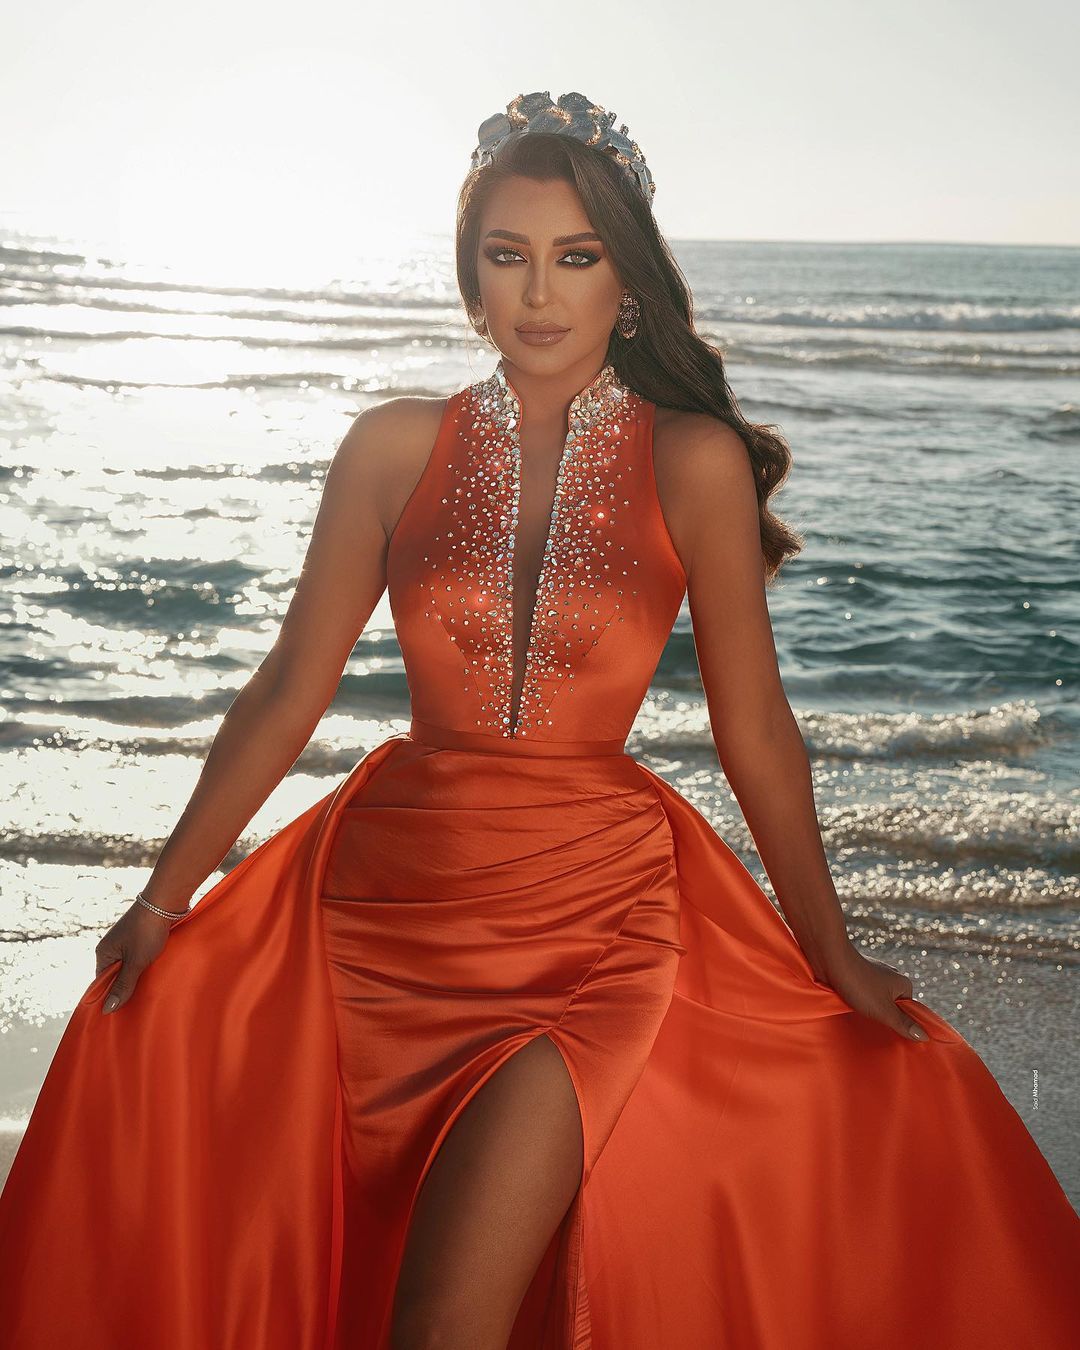 Orange Halter Mermaid Prom Dress Slit Overskirt With Beads